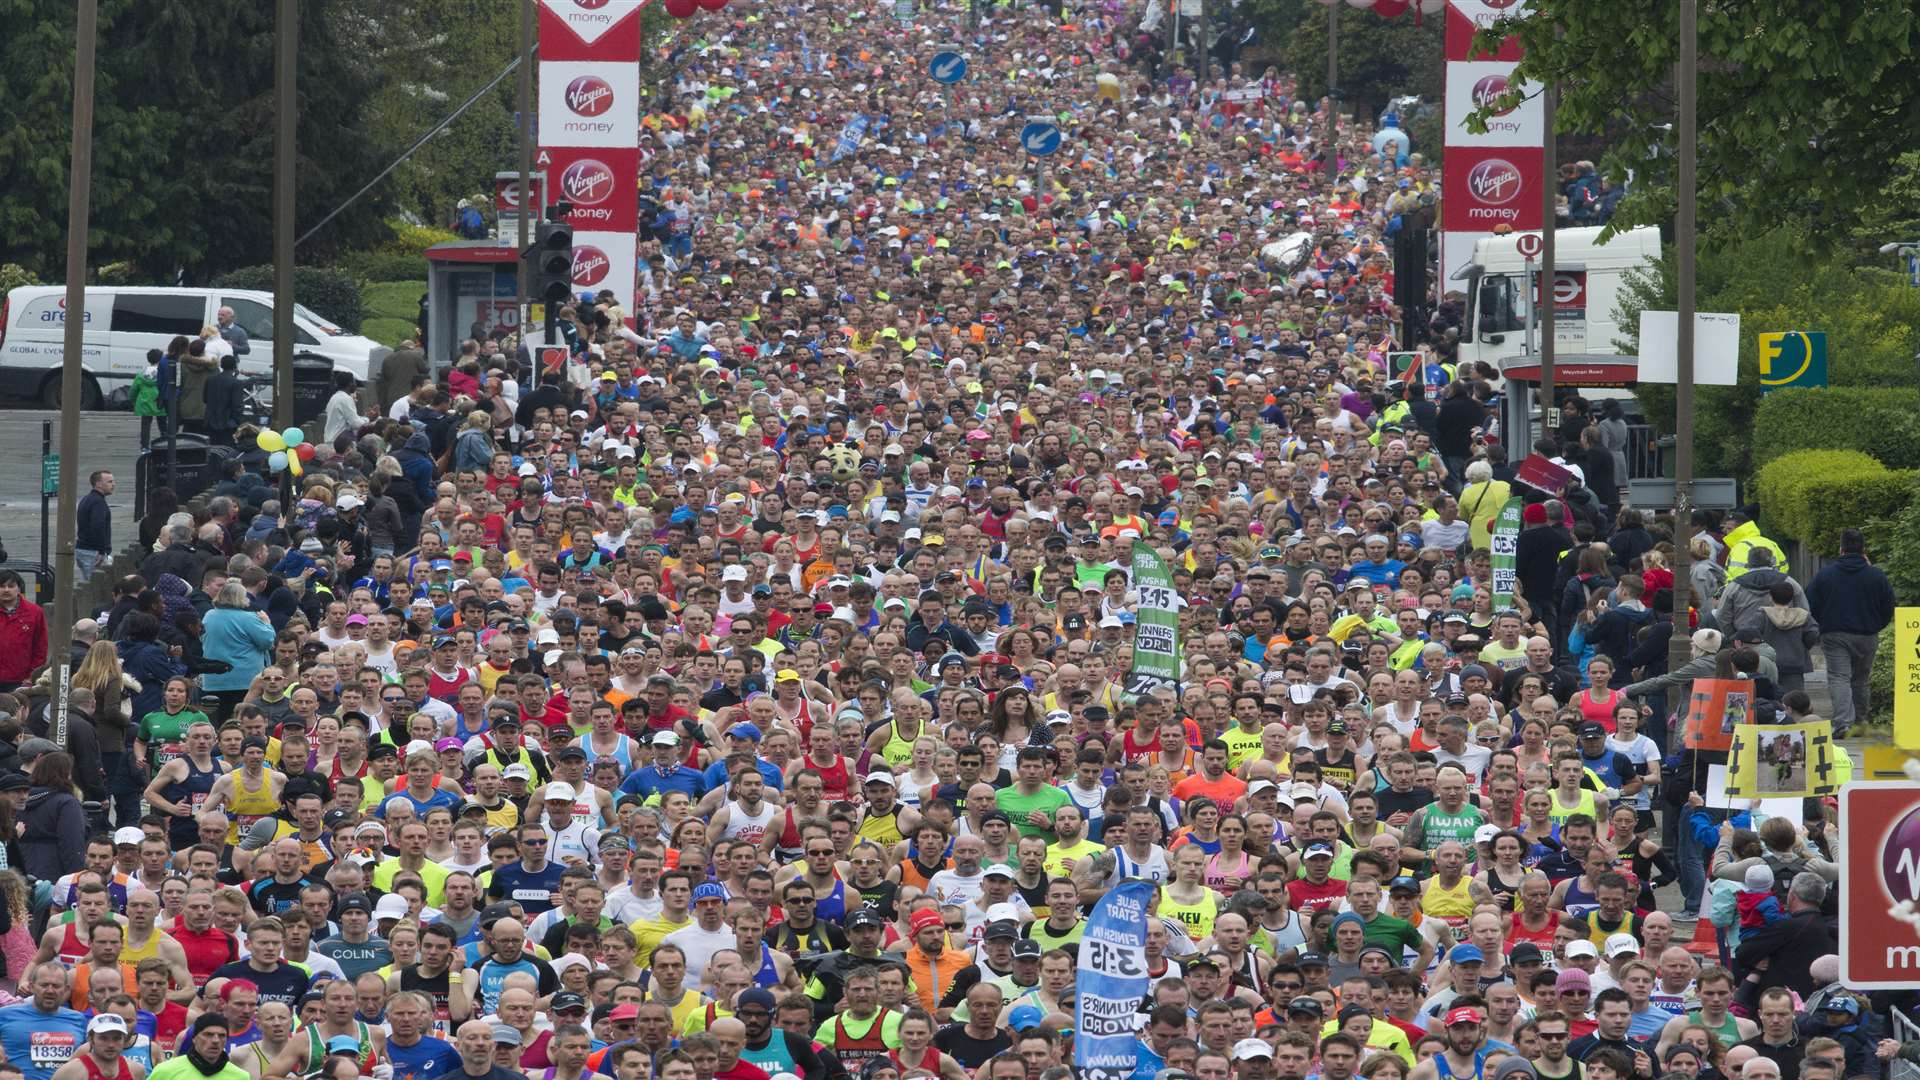 Nick will join the thousands of runners in the London Marathon 2018. Credit: Virgin Money London Marathon.